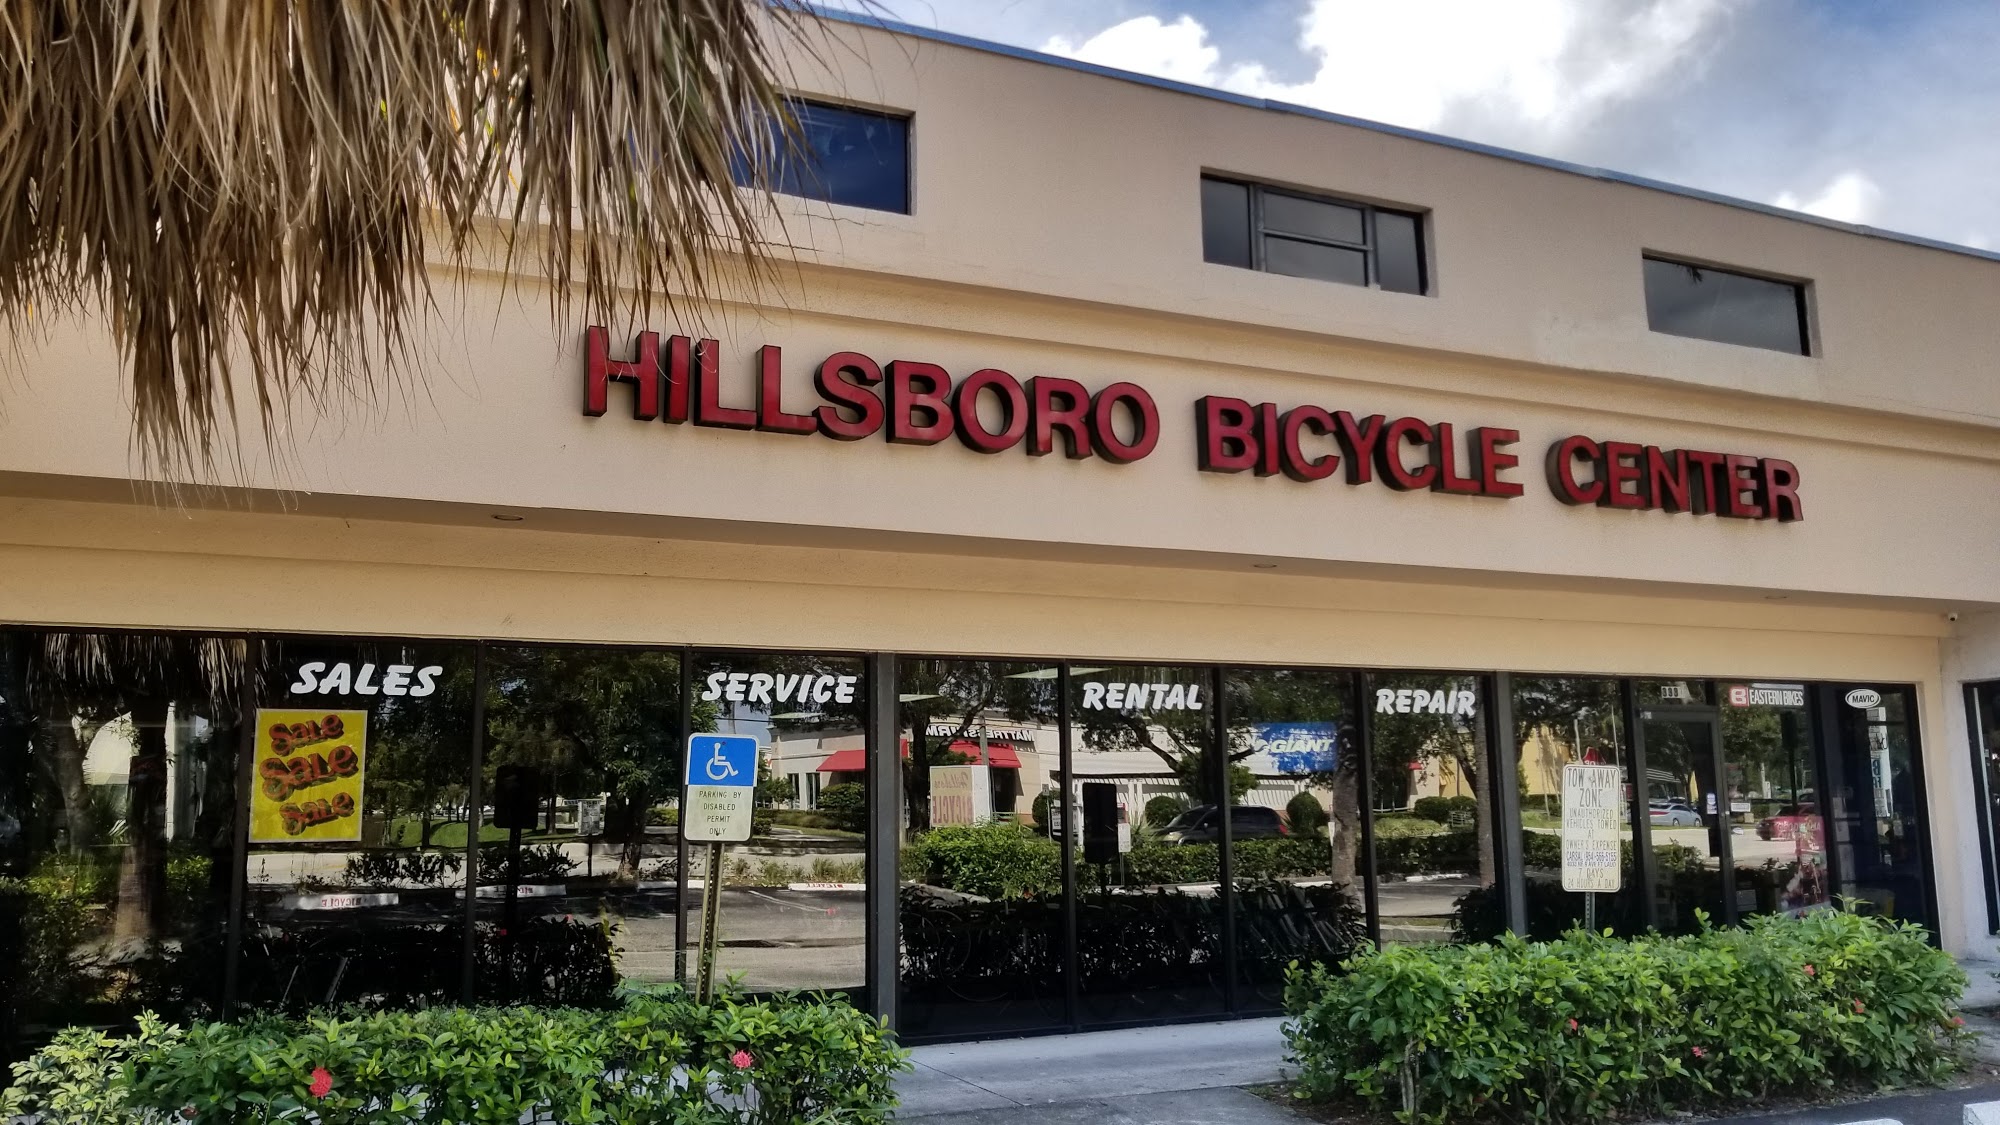 Hillsboro Bicycle Center